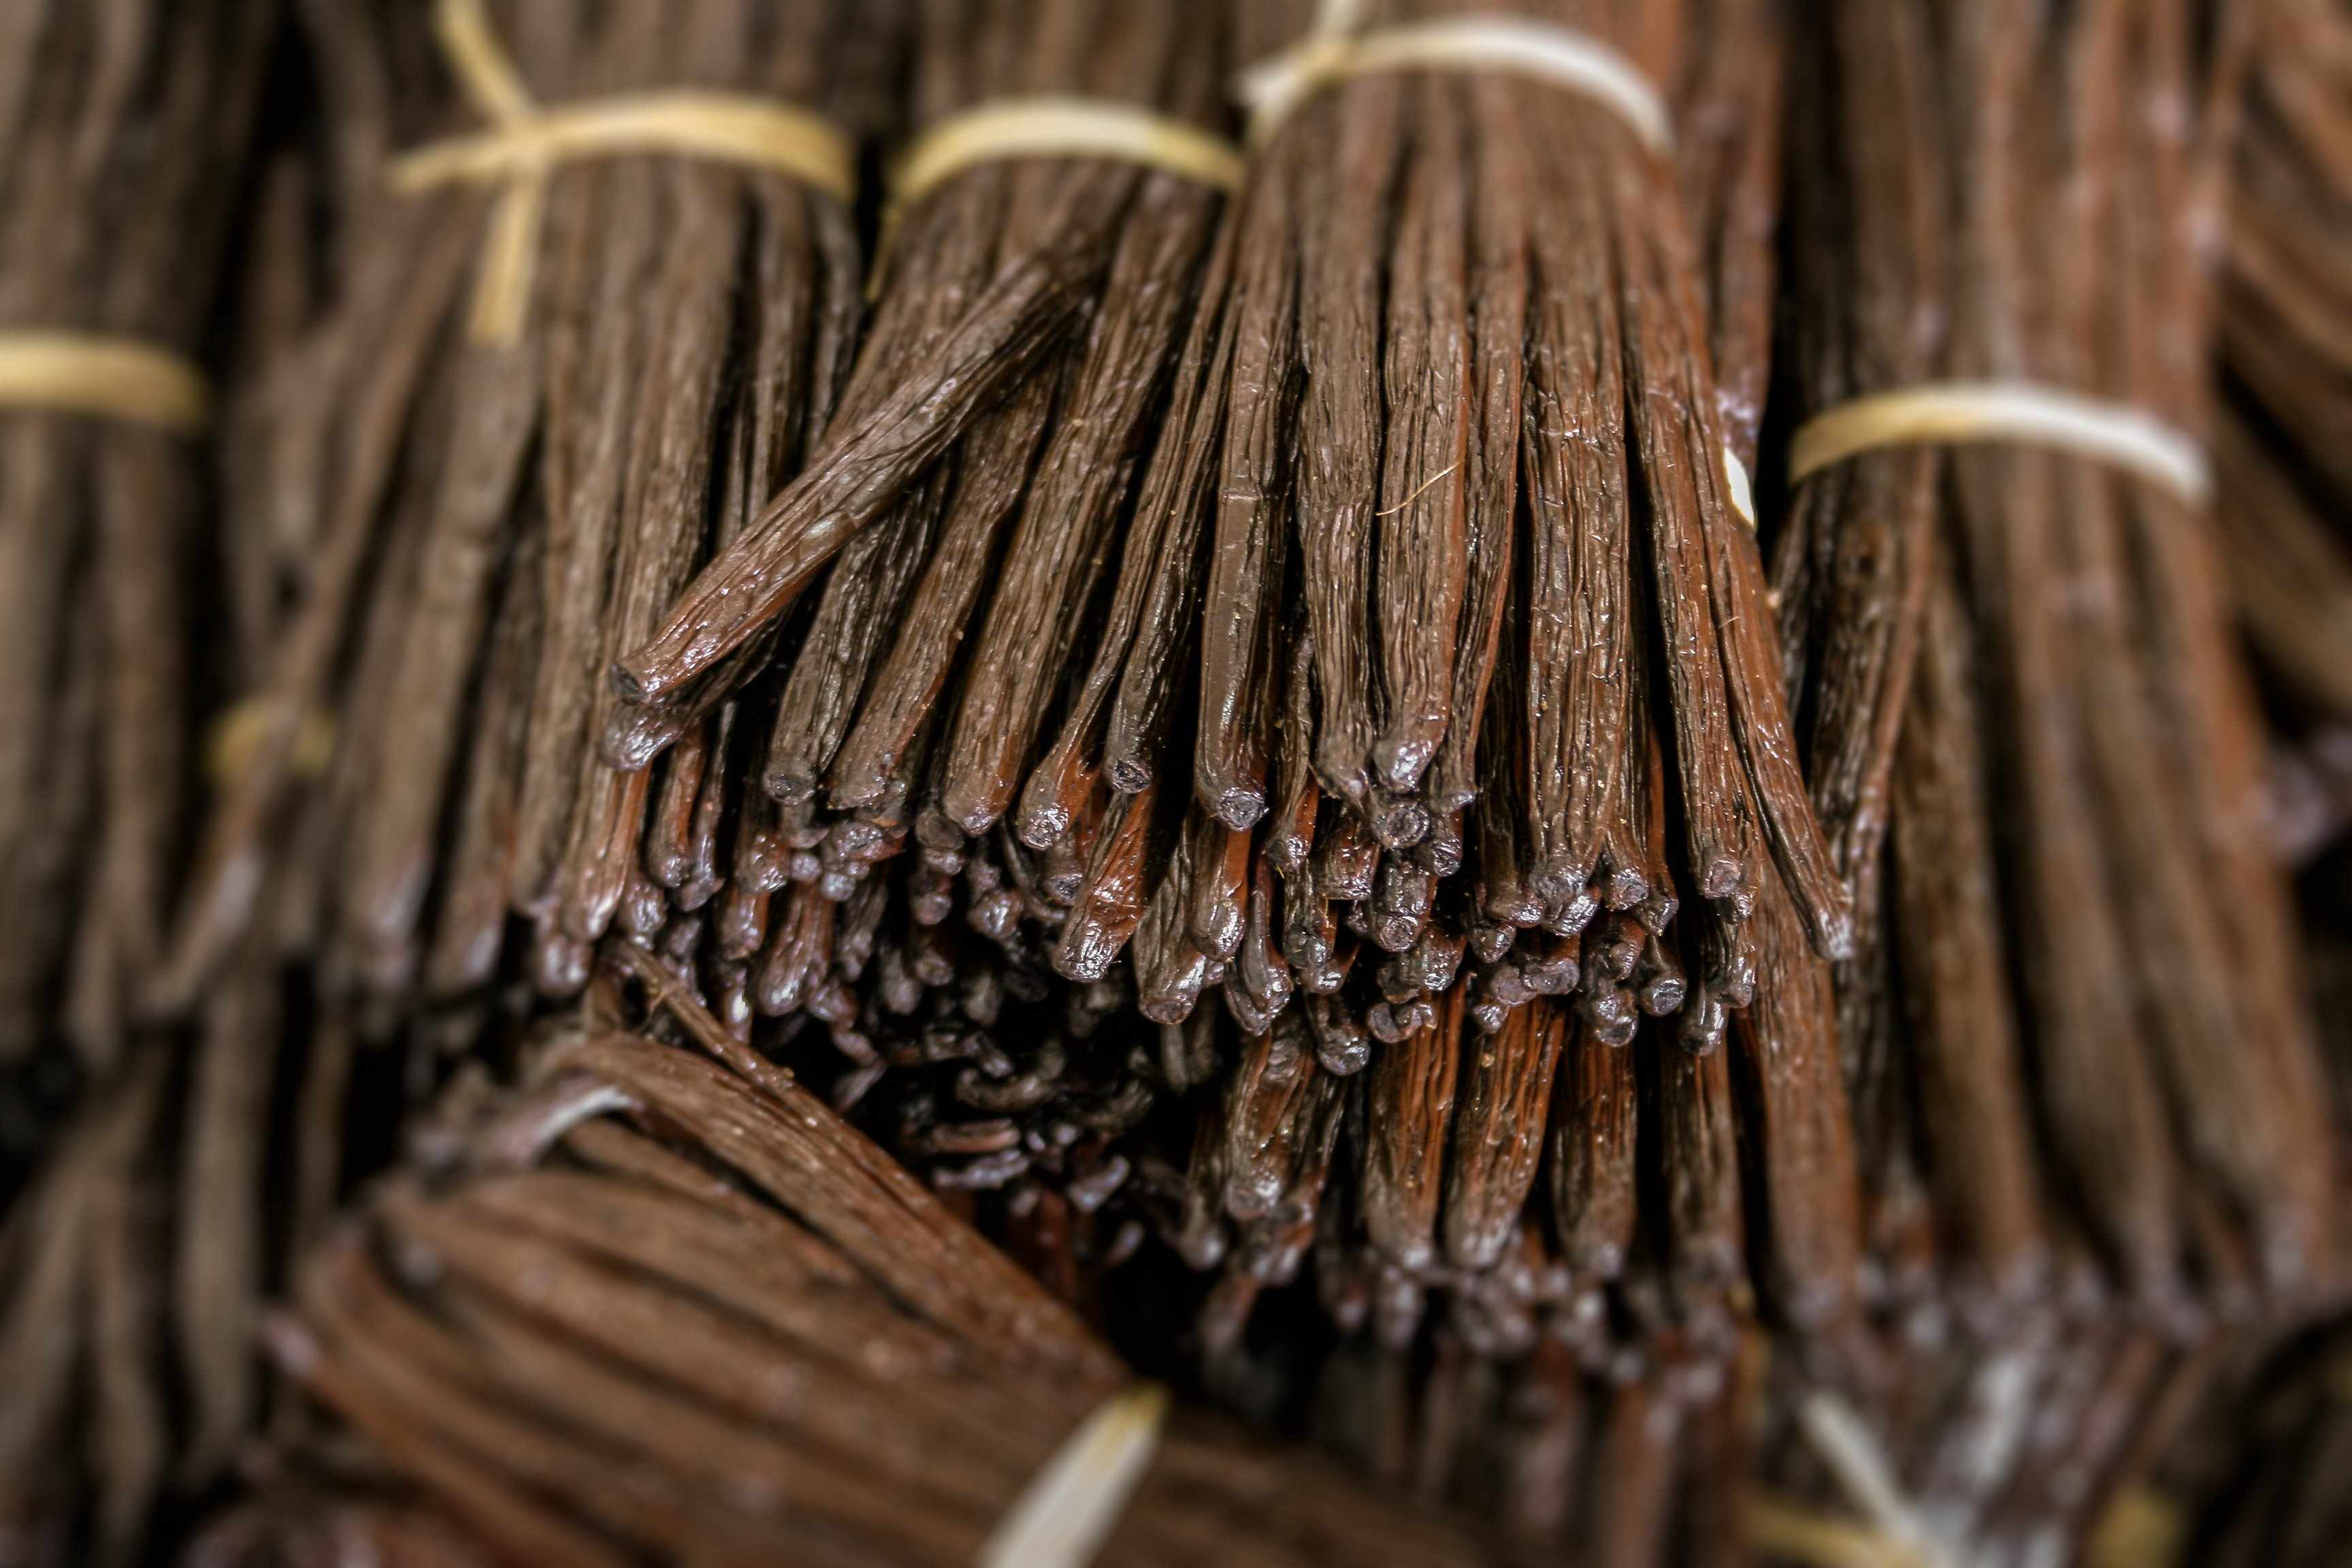 multiple bundles of Madagascar vanilla beans in bulk